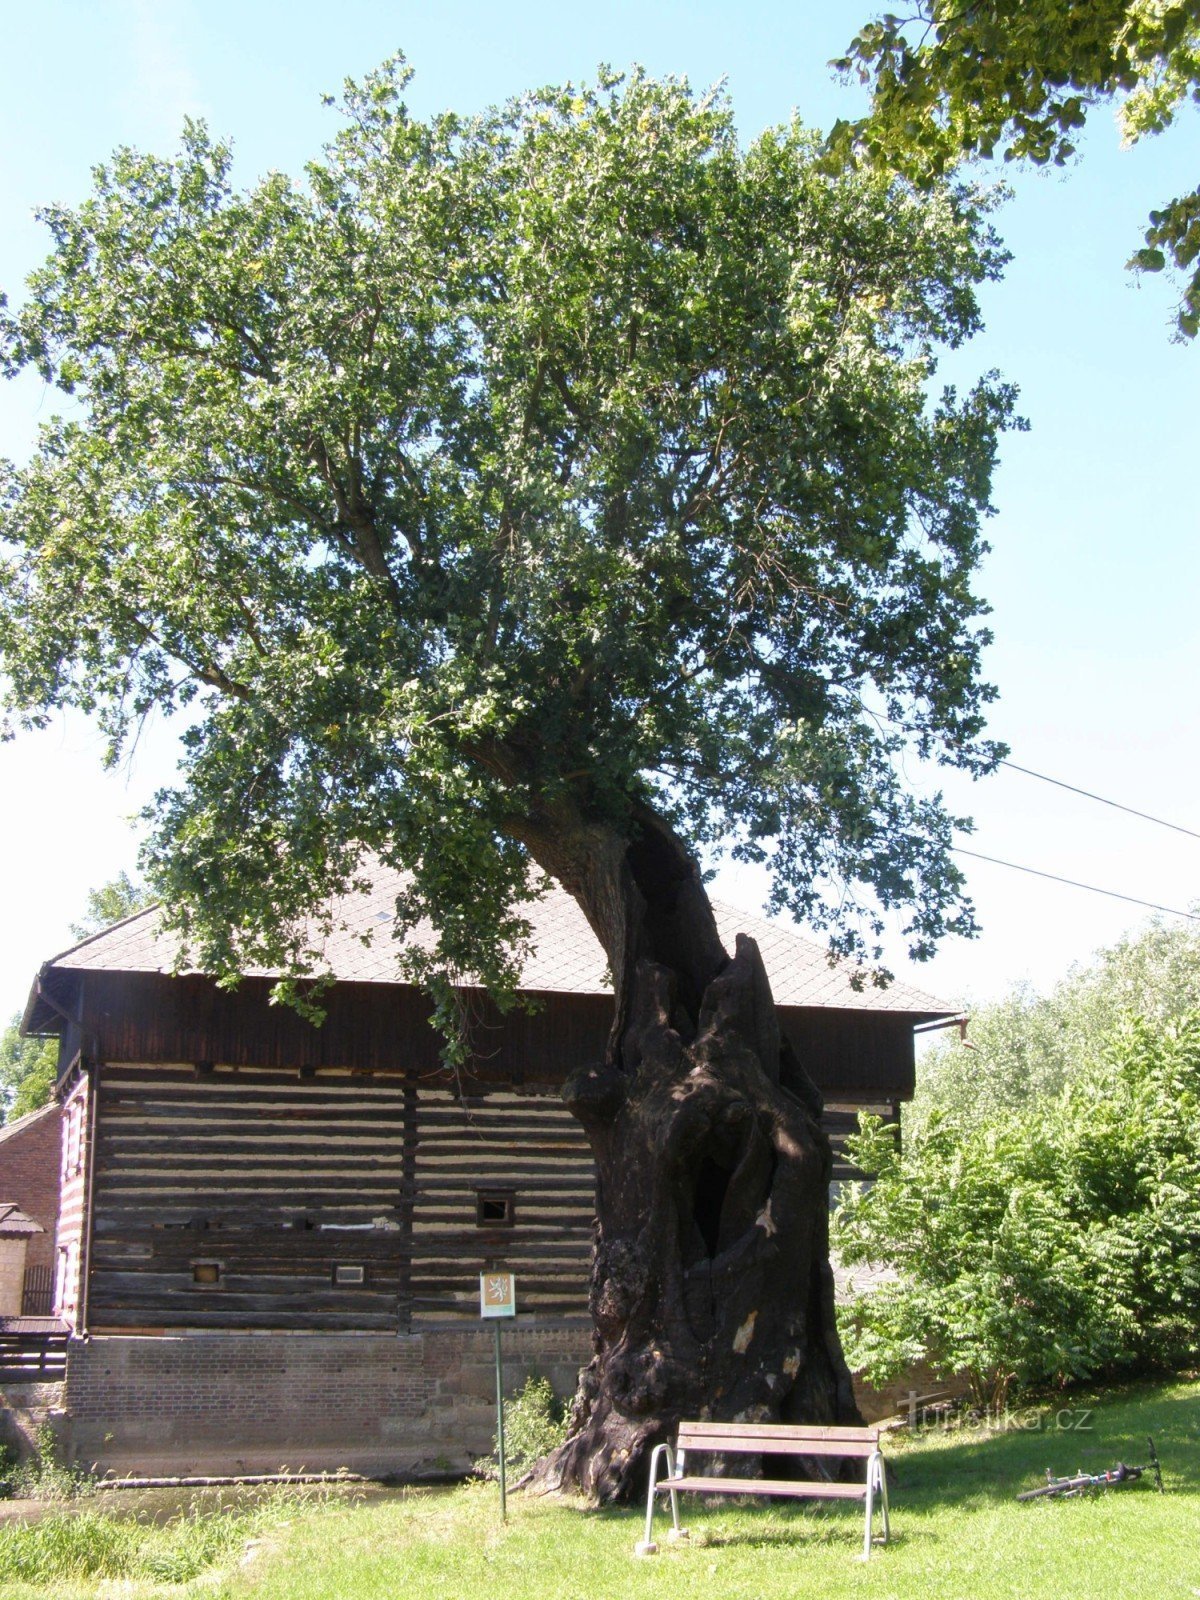 Popovice - moulin et vieux chêne